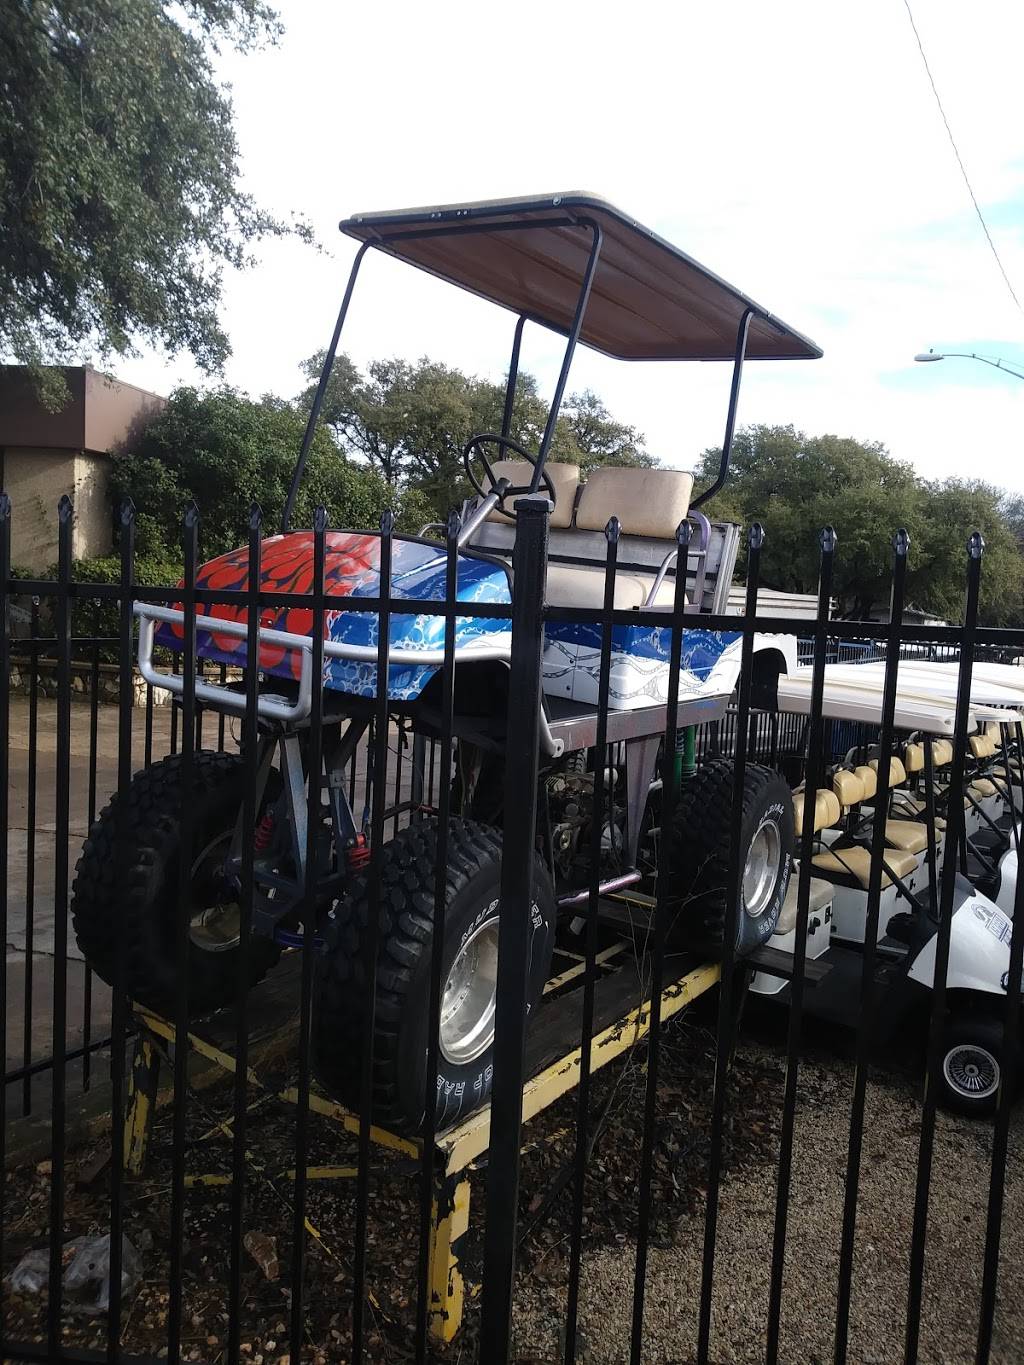 Kenfield Golf Cars | 13357 Pond Springs Rd, Austin, TX 78729, USA | Phone: (512) 258-8515